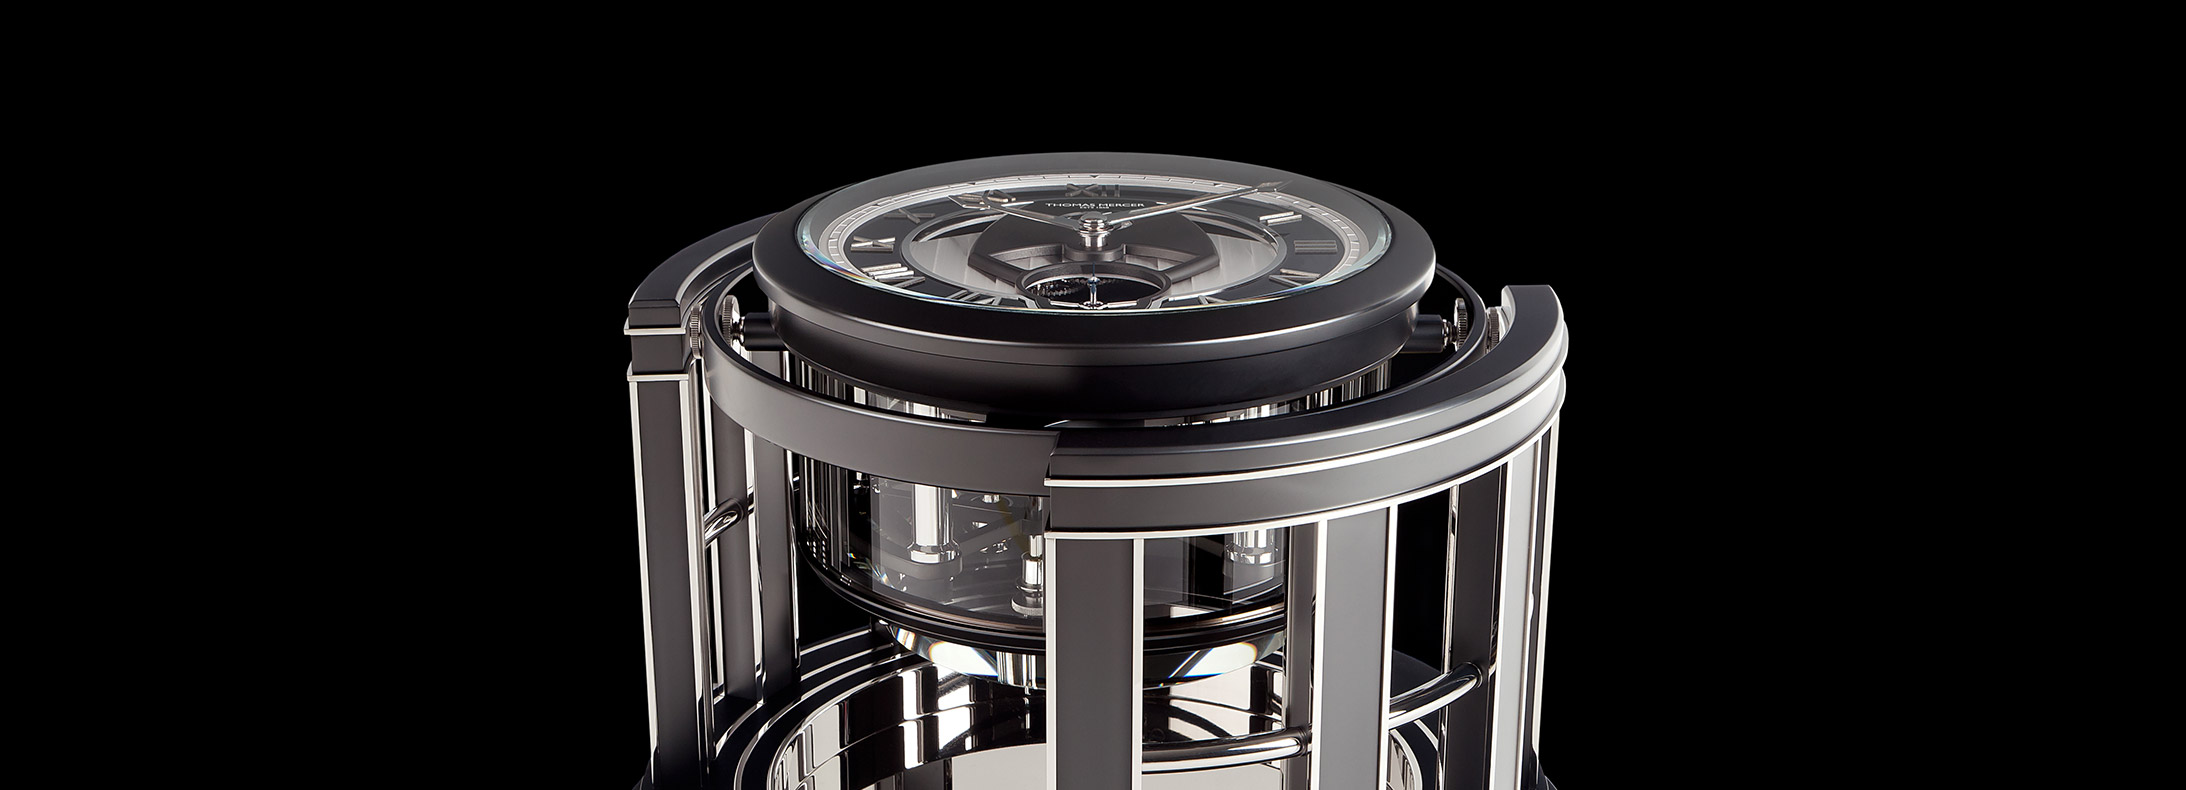 Legacy Marine chronometer boasting a superior architecture cabinet